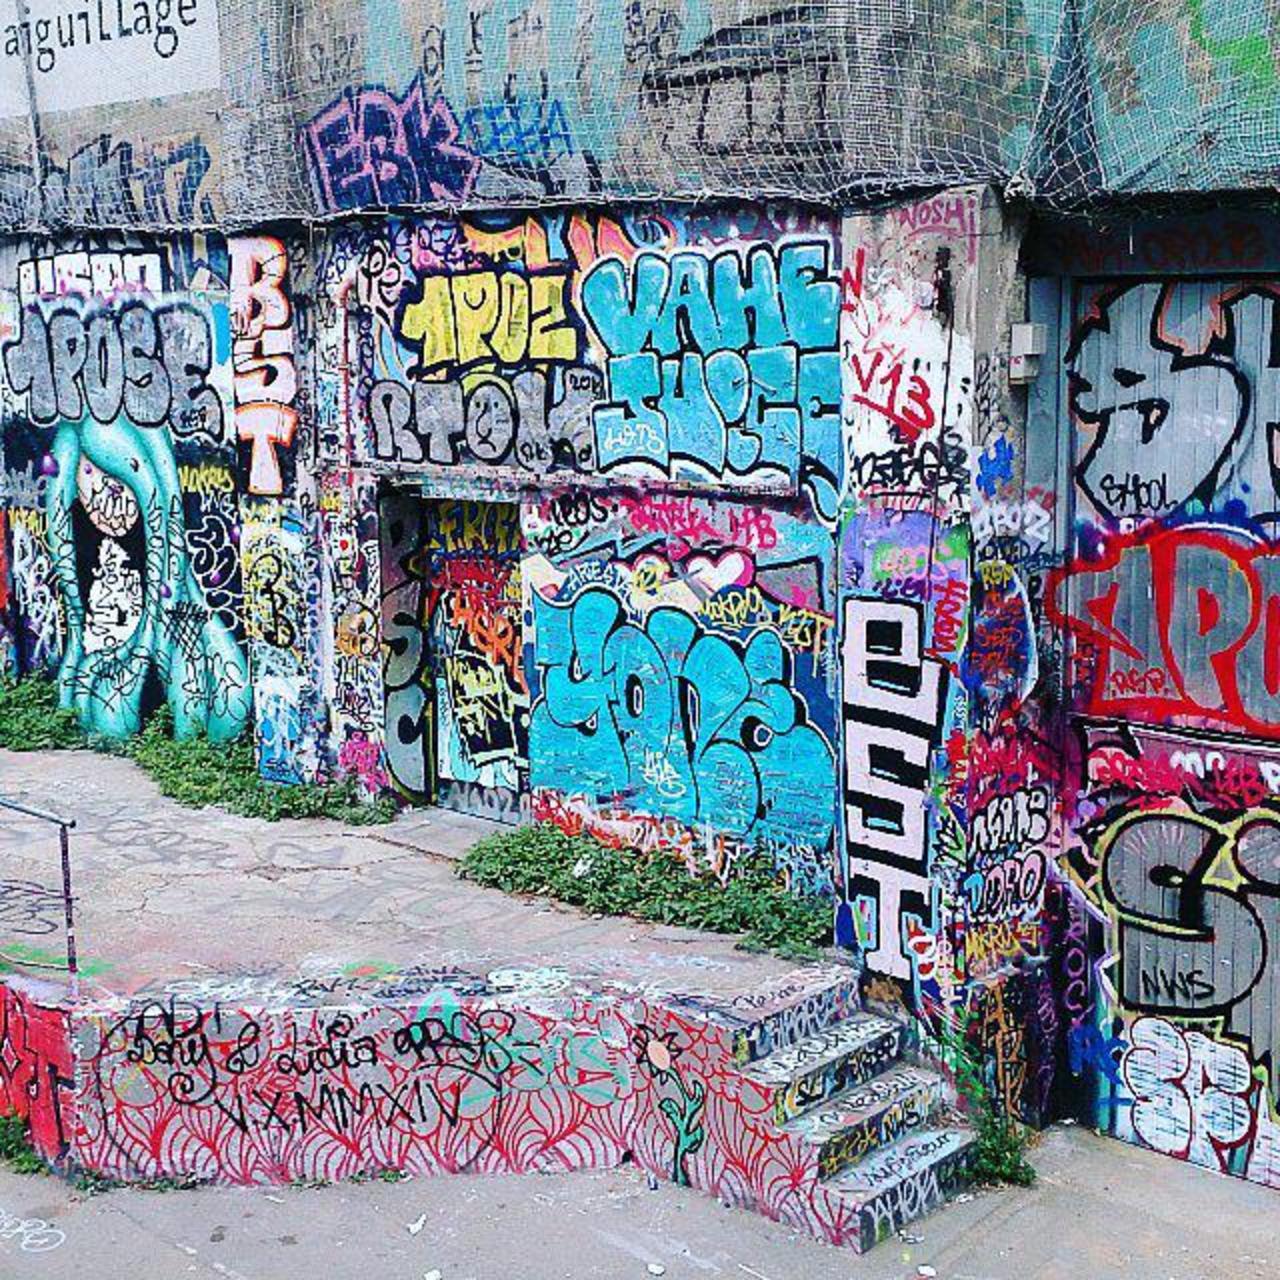 RT @damonx:  #graffiti #streetart #street #art #paris http://ift.tt/1jec66Q http://t.co/hspcjlWY6m